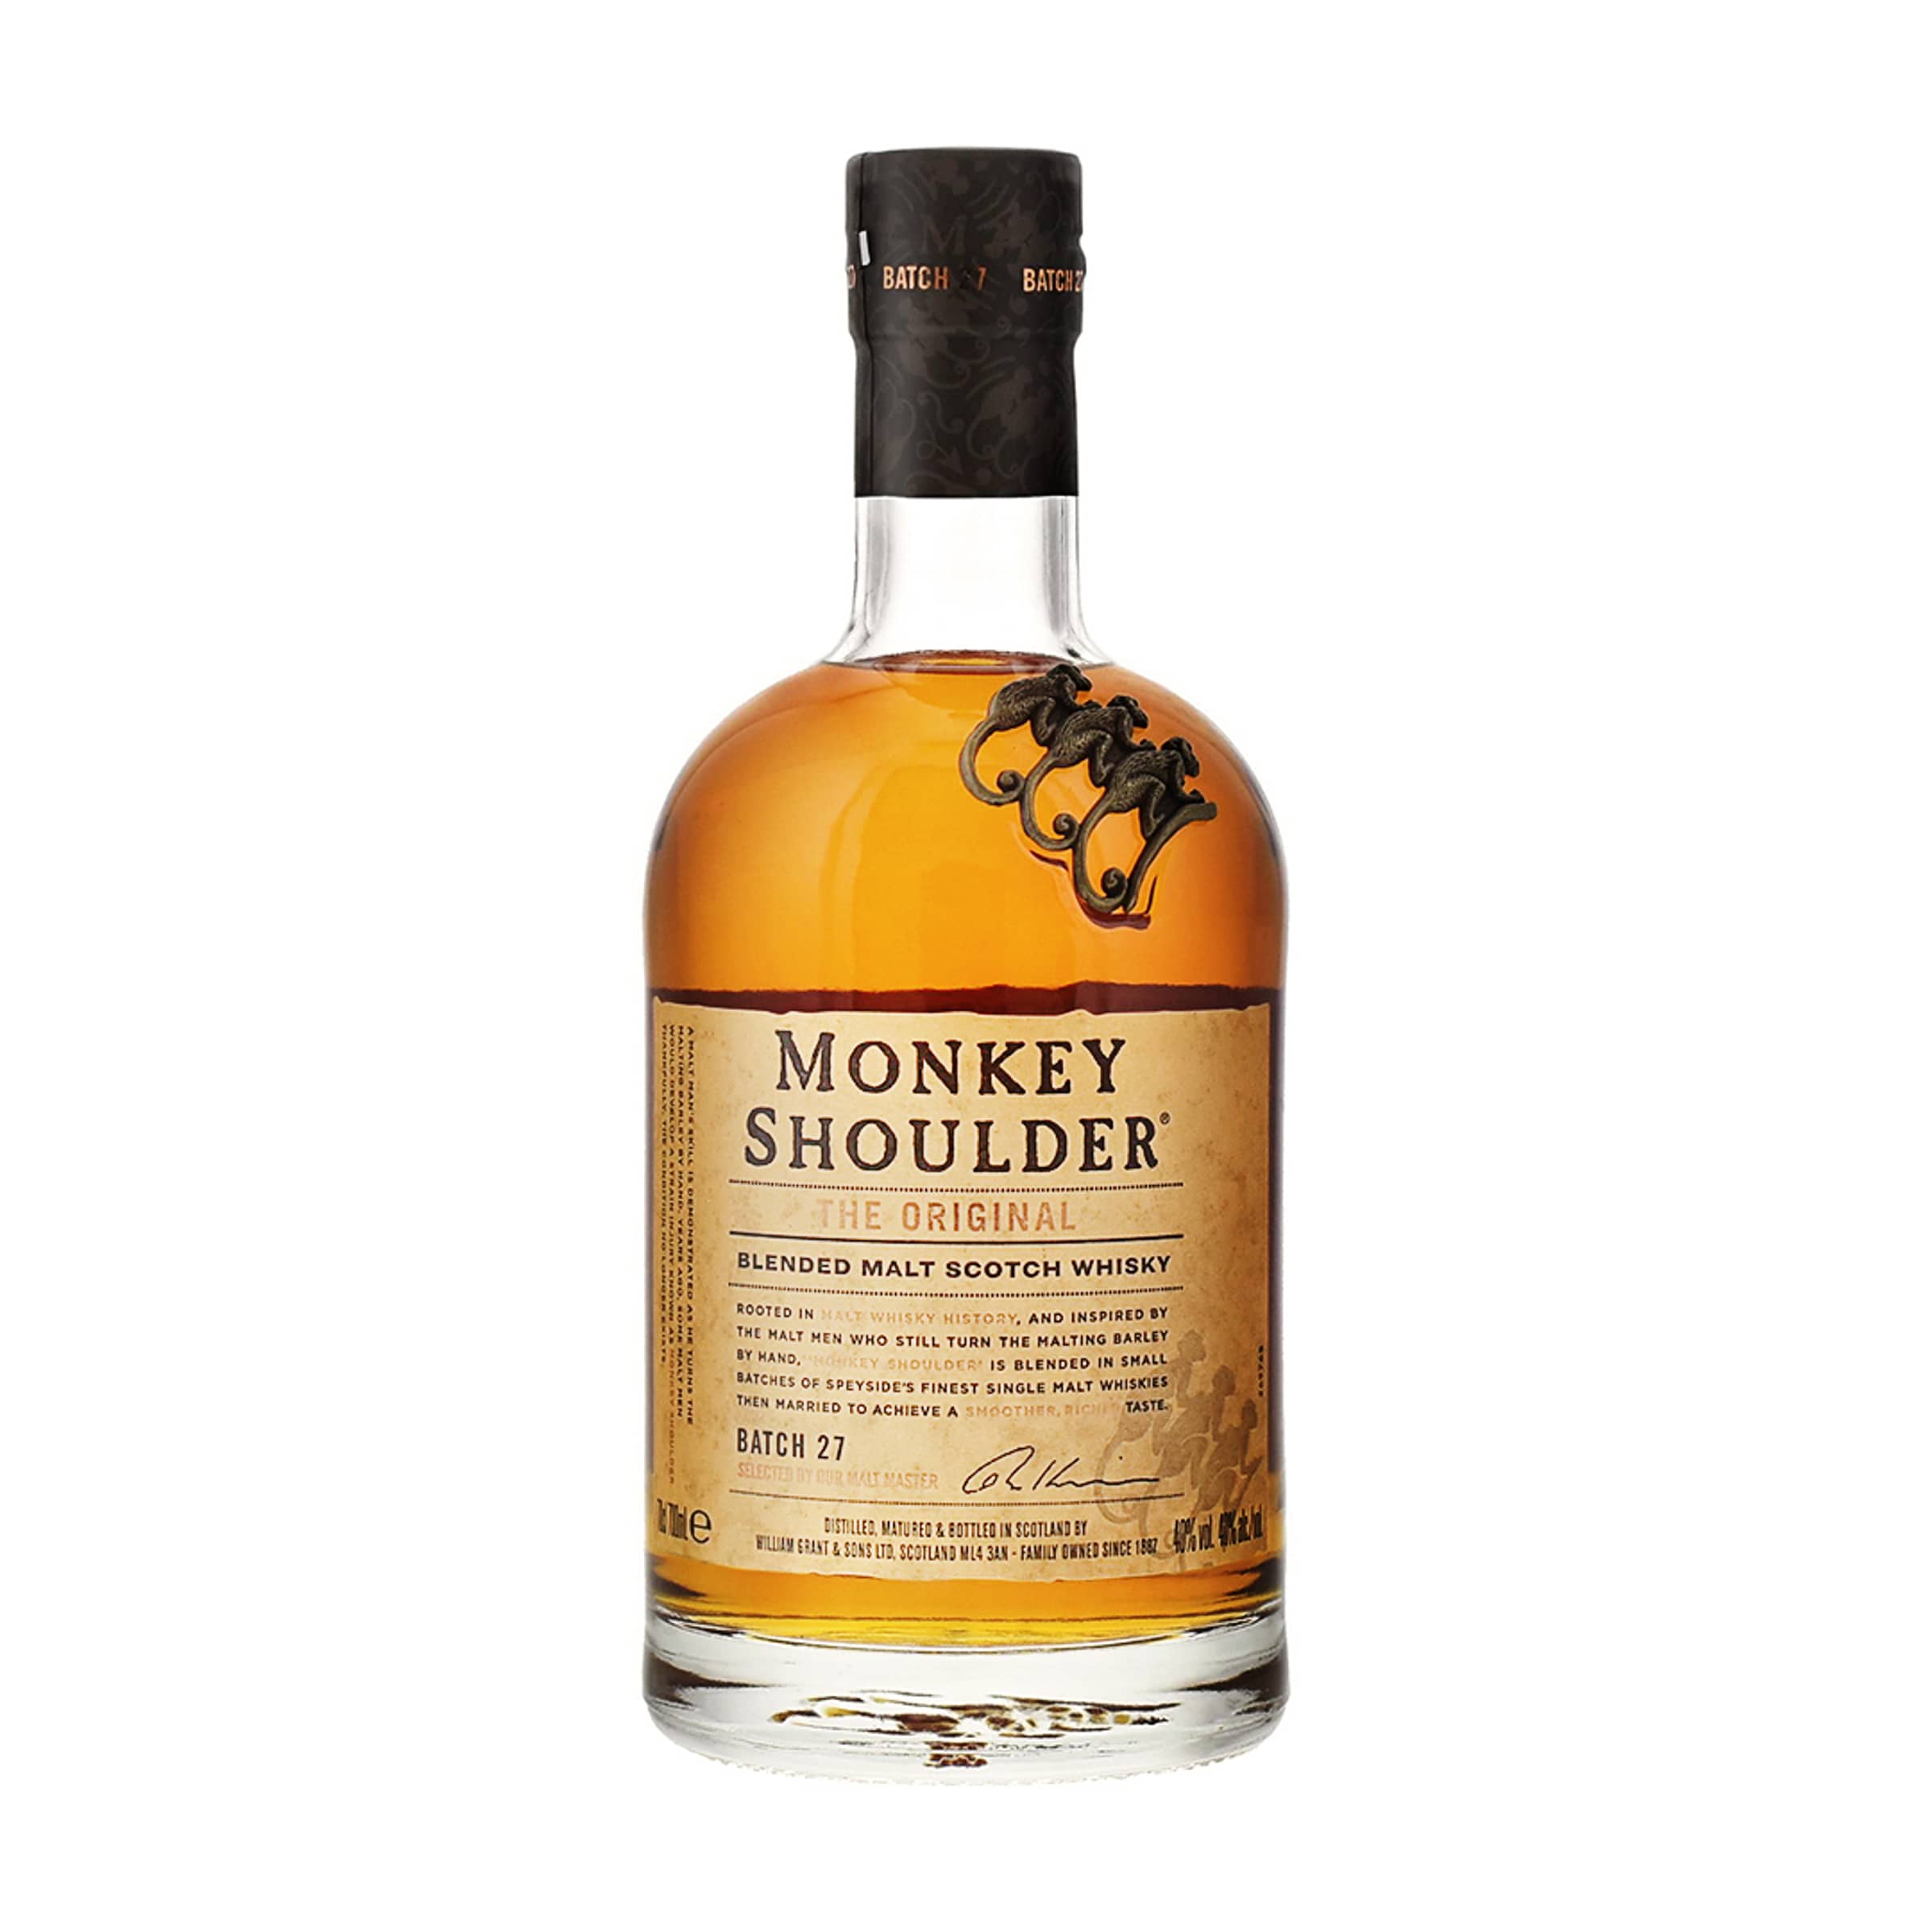 Whisky Ecossais - Monkey Shoulder - blended